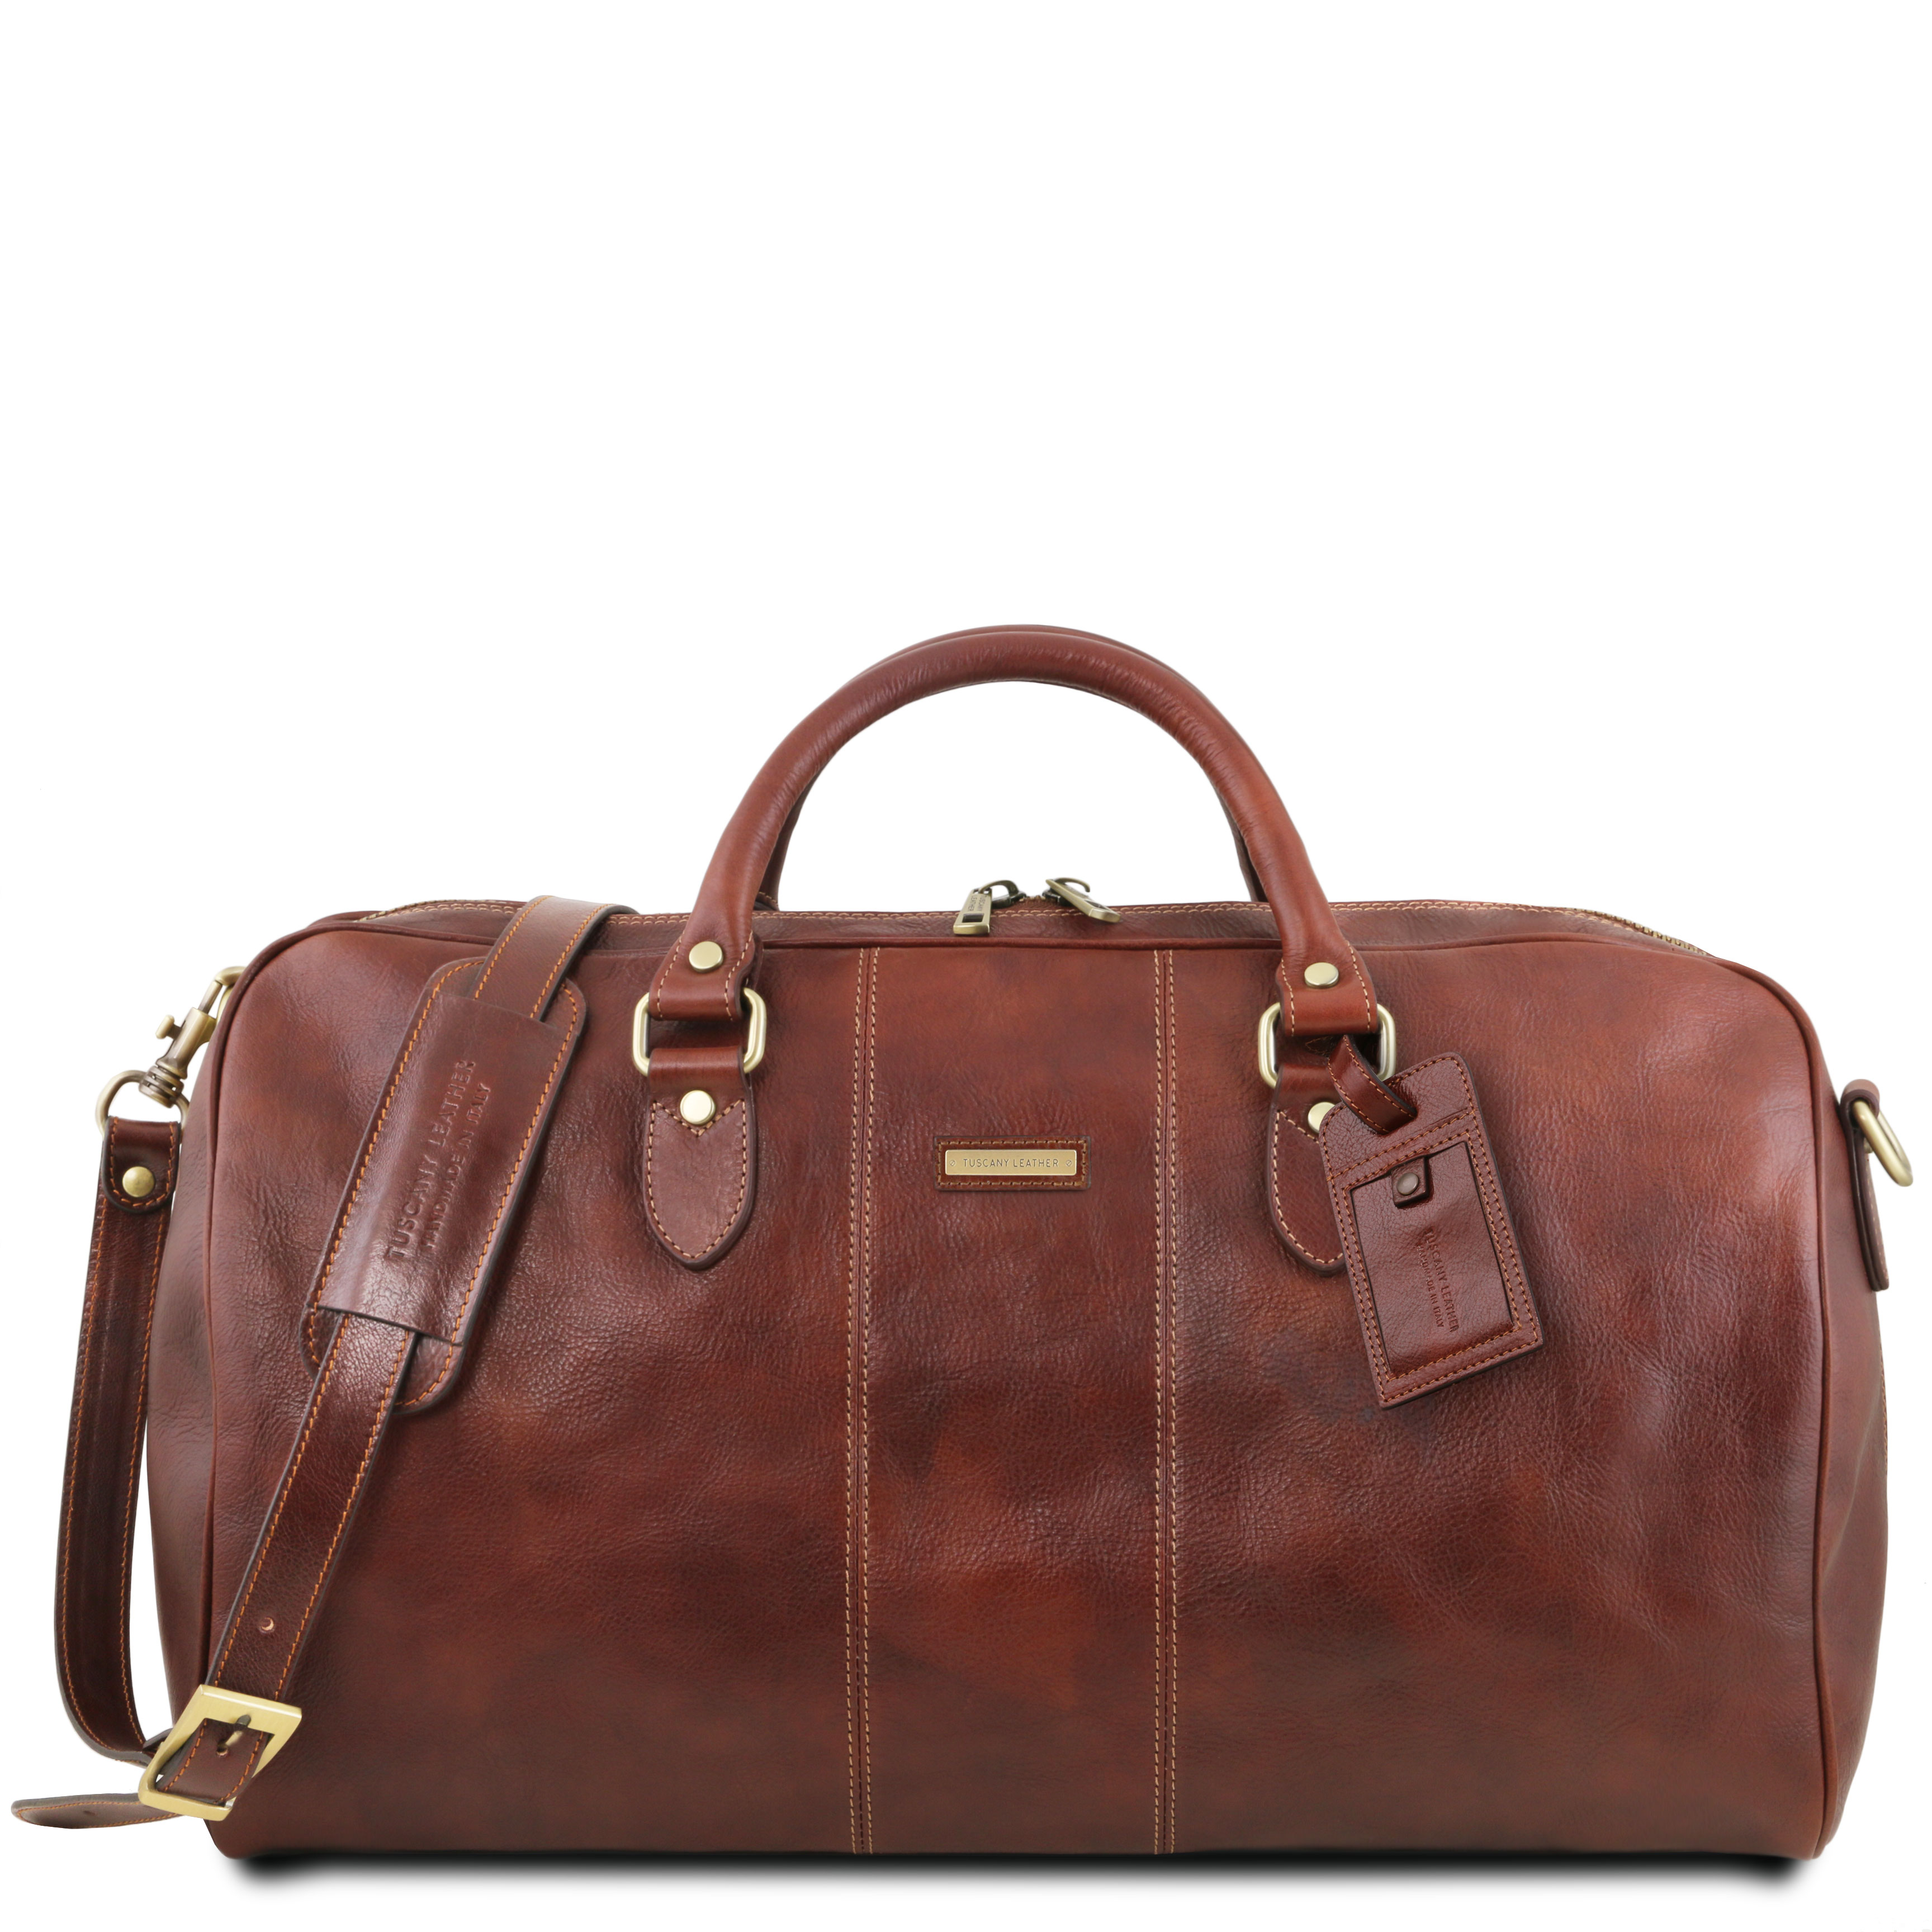 Lisbona Travel leather duffle bag - Large size Brown